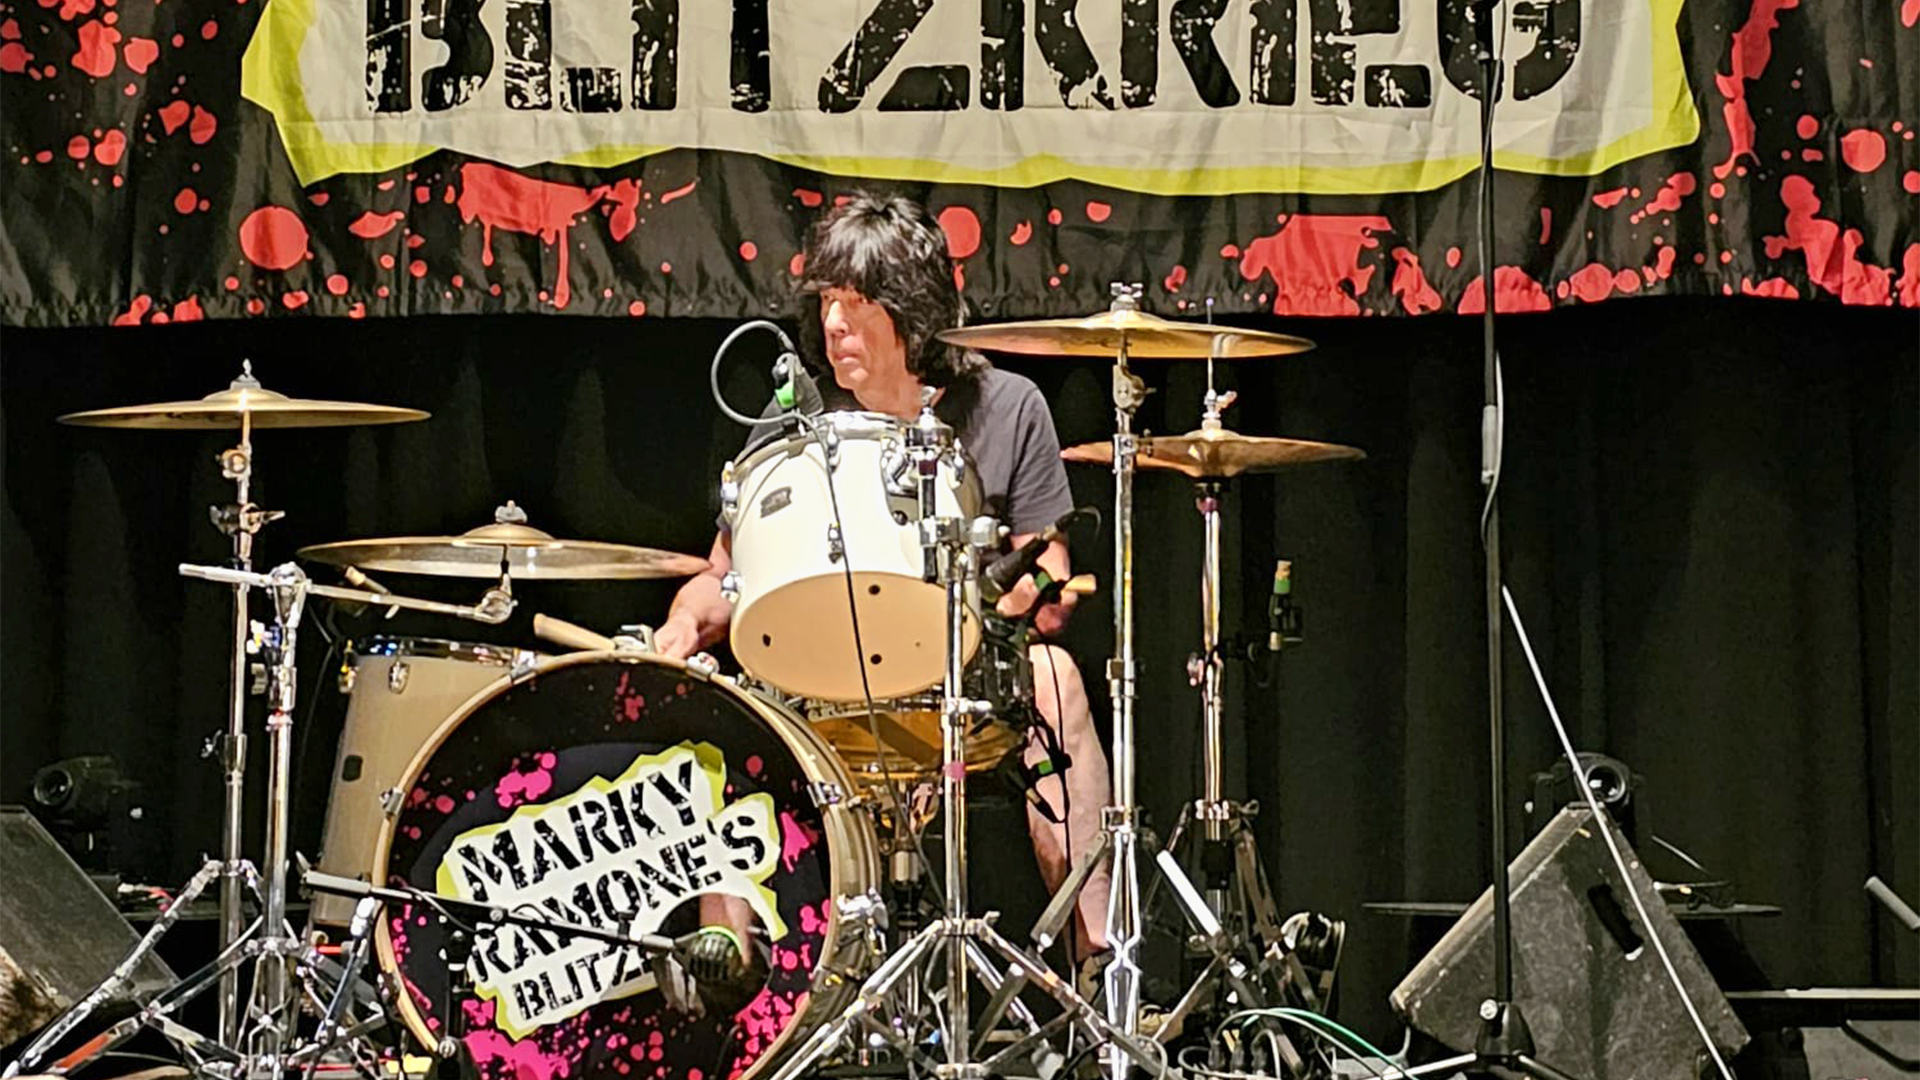 Backdrop Marky Ramone Blitzkrieg Oficial Tour na Europa